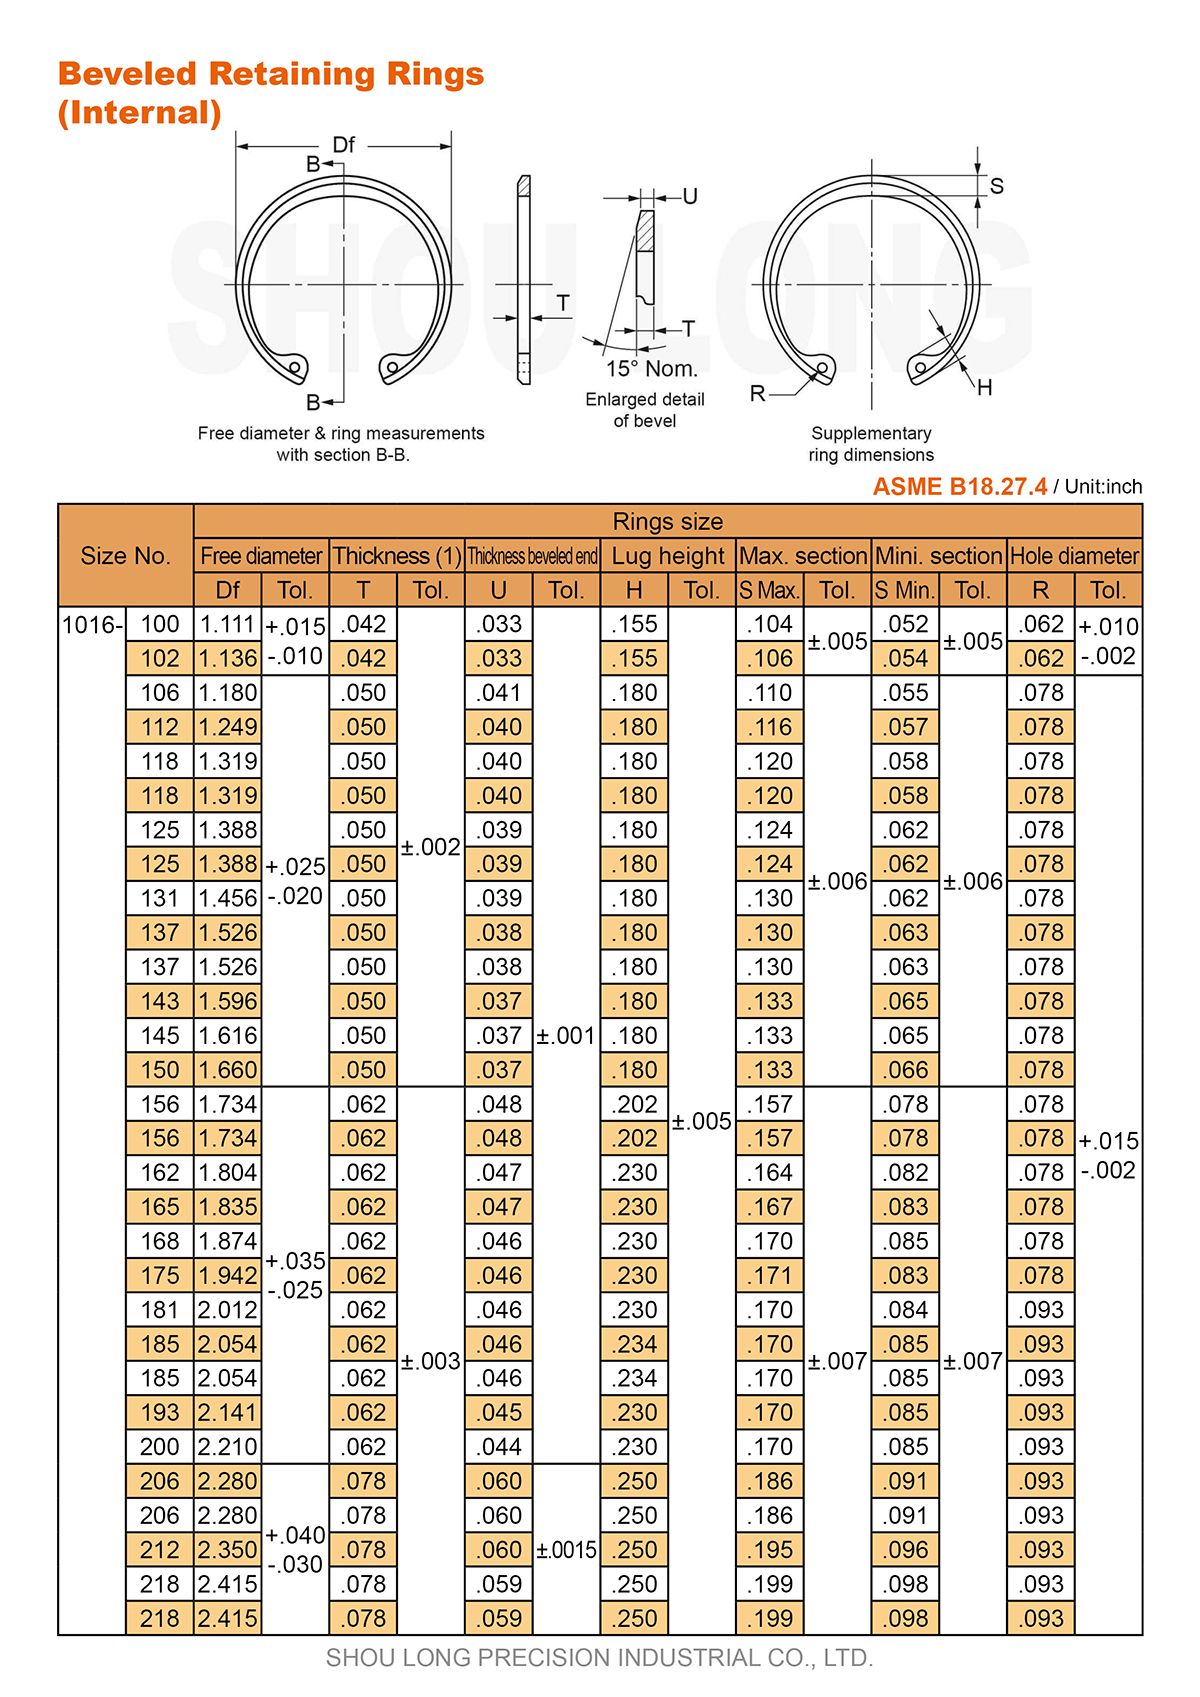 Spec of Inch Beveled Retaining Rings for Bores ASME/ANSI B18.27.4-1